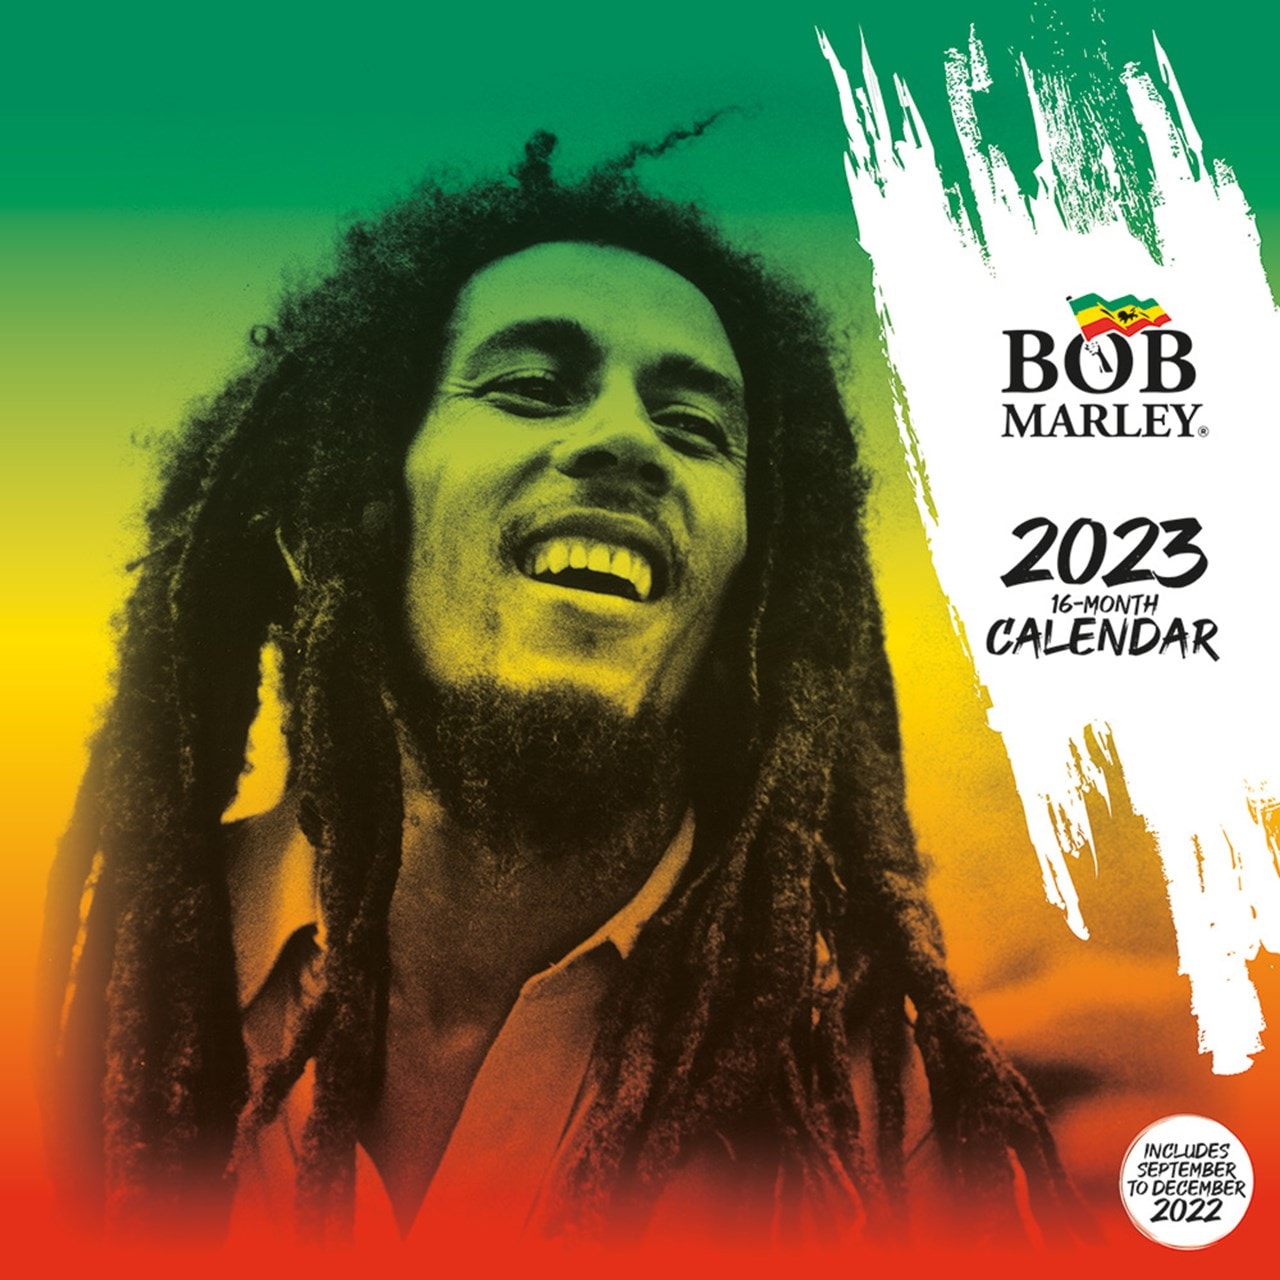 Bob Marley 2023 Square Calendar Calendar Free shipping over £20